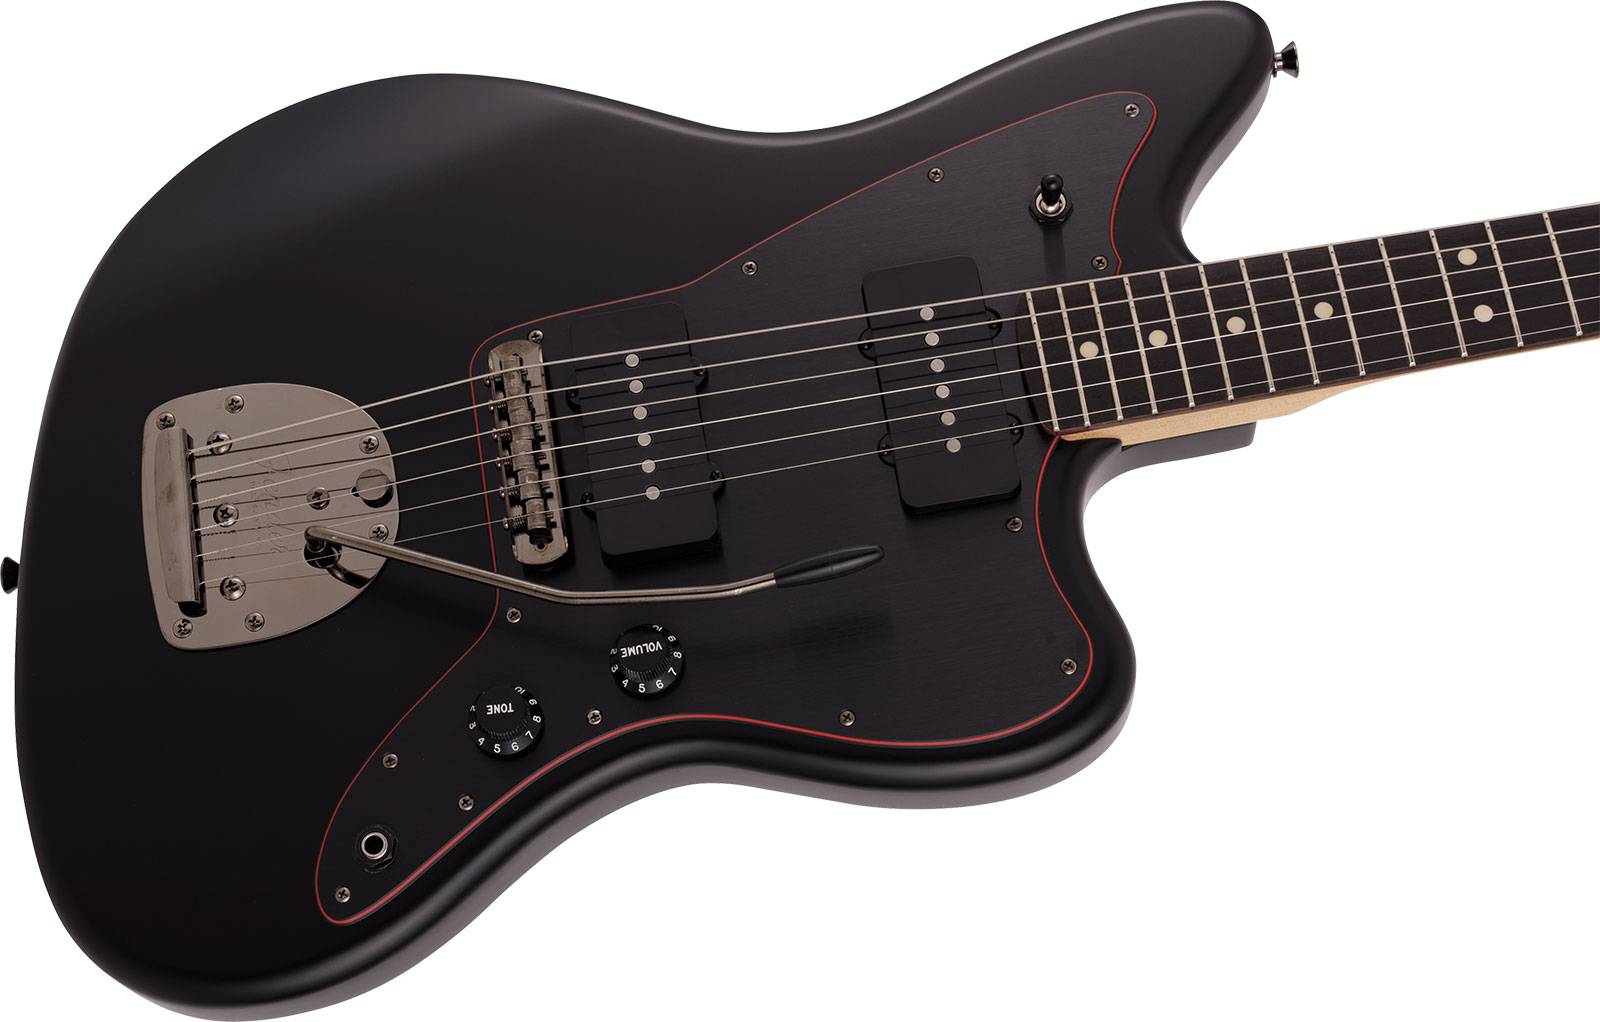 Fender Jazzmaster Hybrid Ii Jap 2s Trem Rw - Satin Black - Retro rock electric guitar - Variation 2